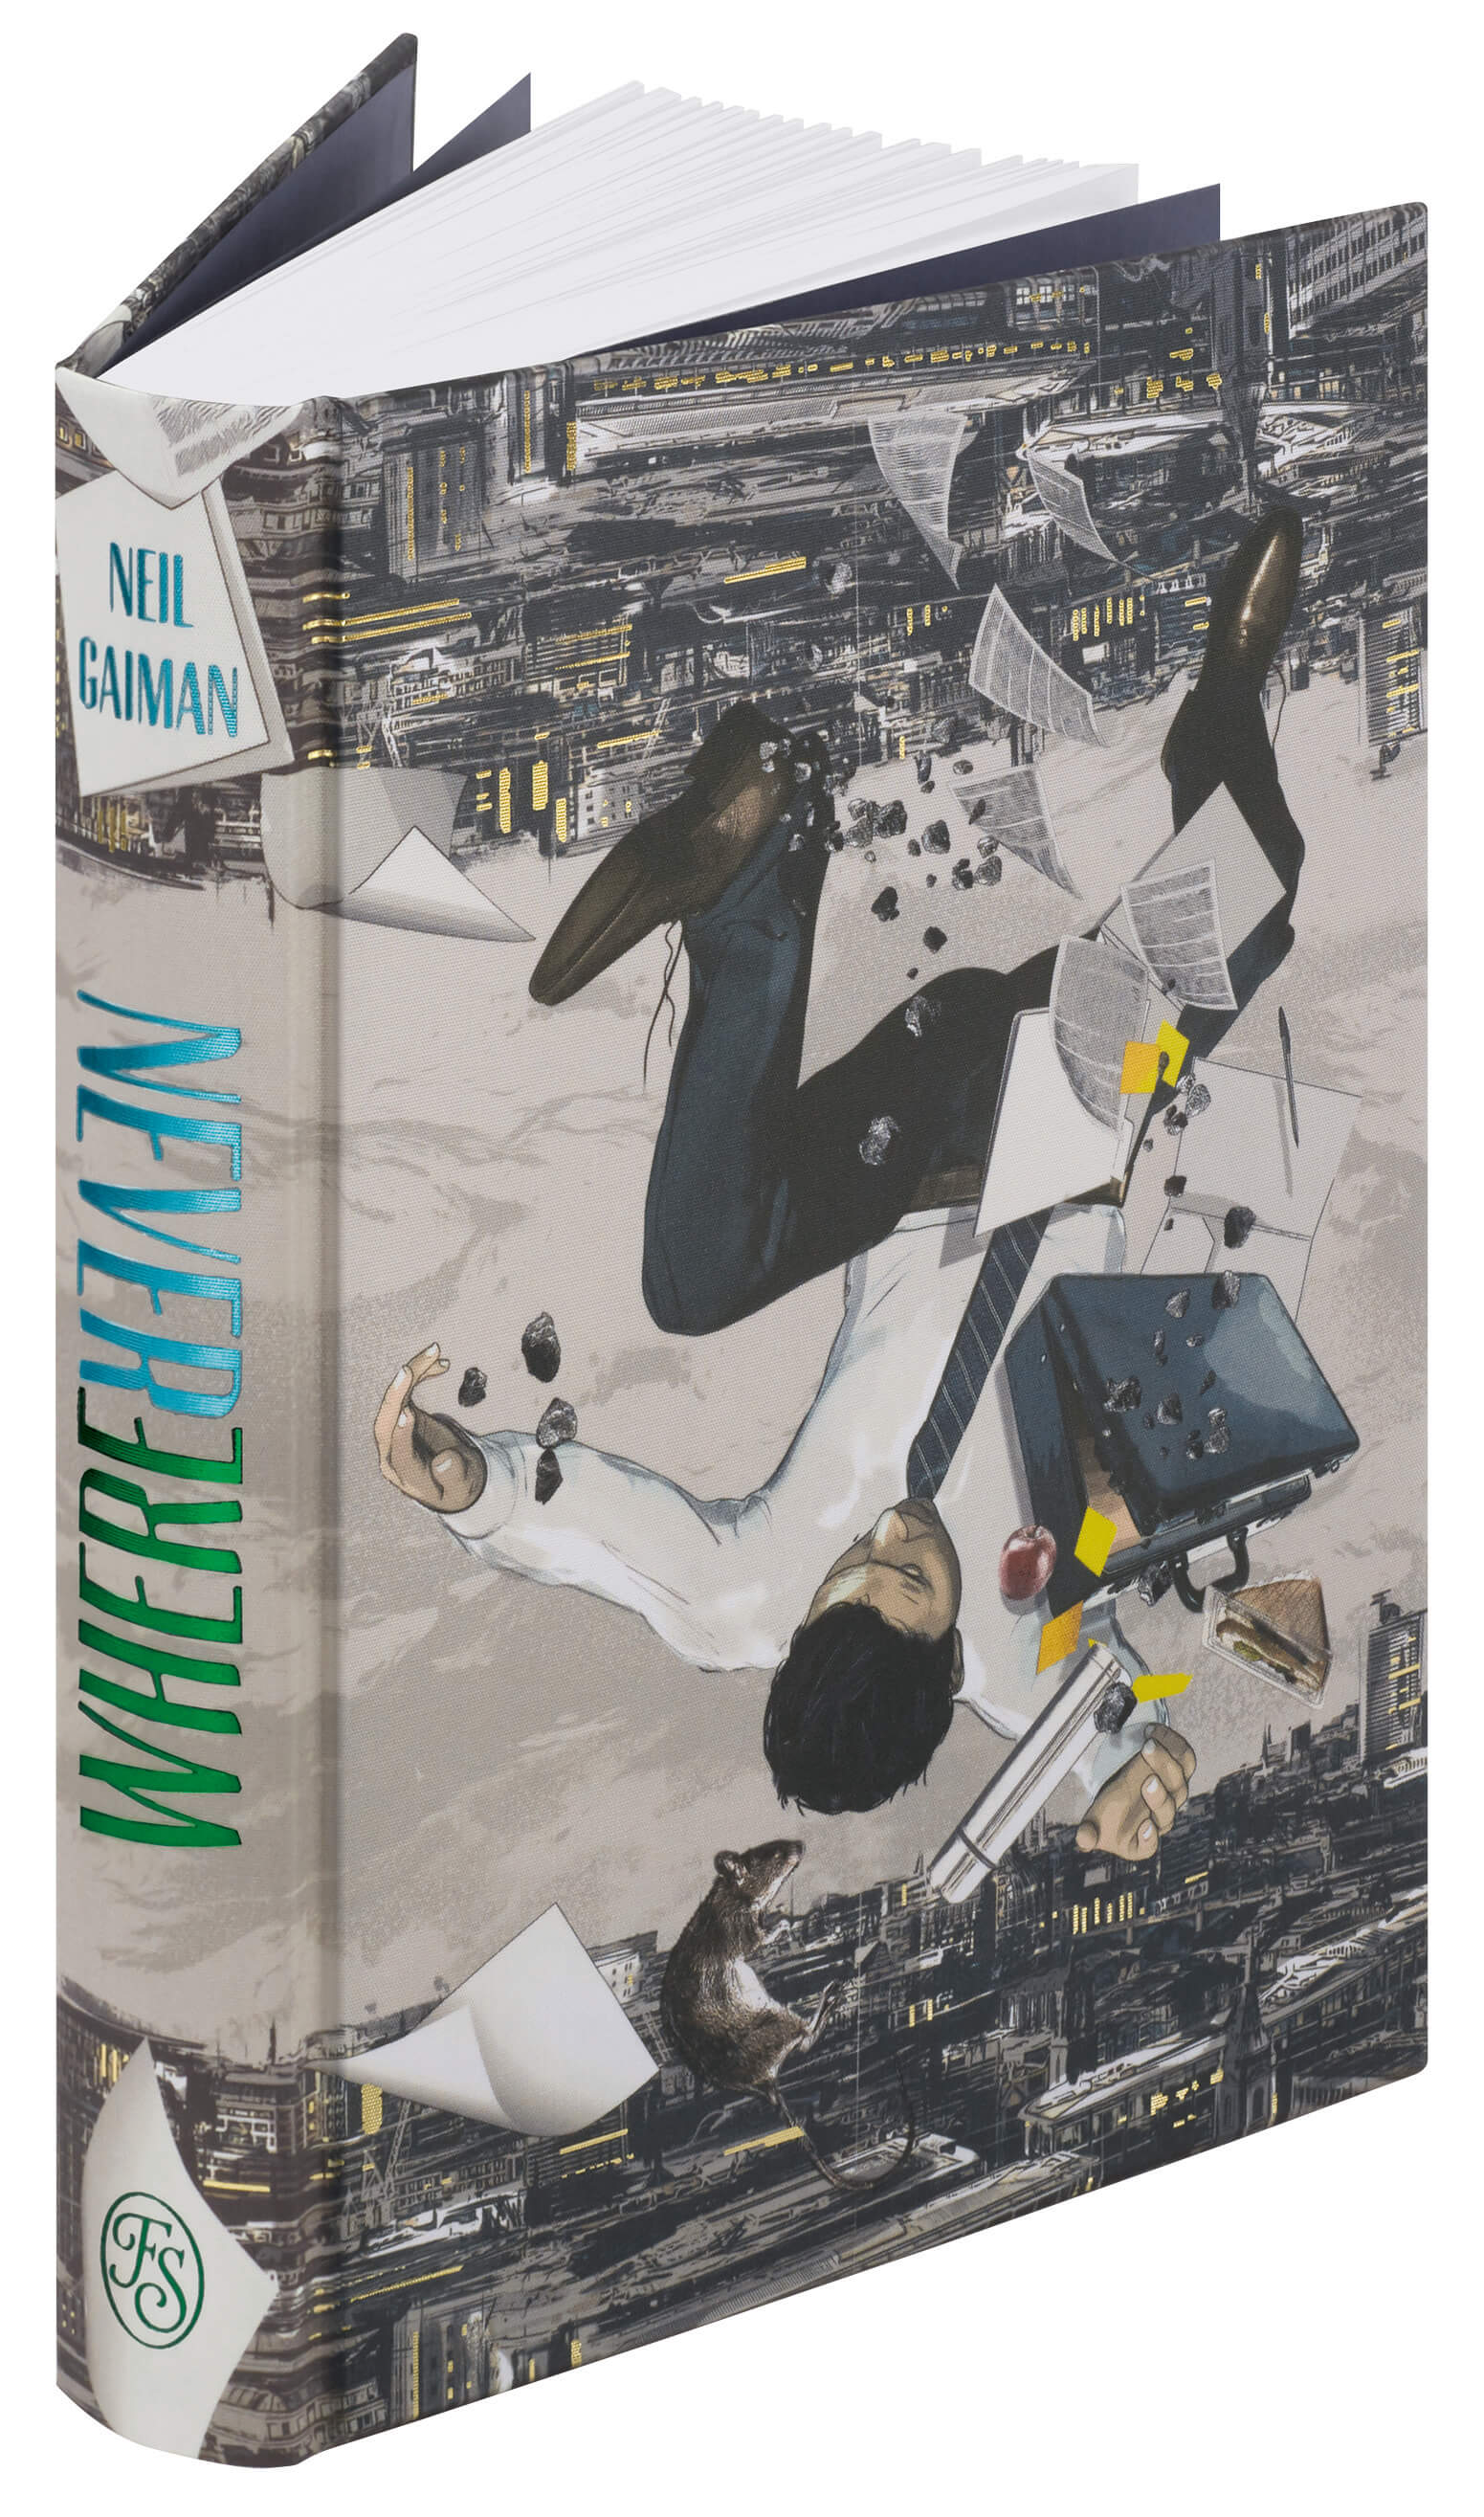 Neverwhere - Neil Gaiman - Fiction Fantasy Sci-Fi